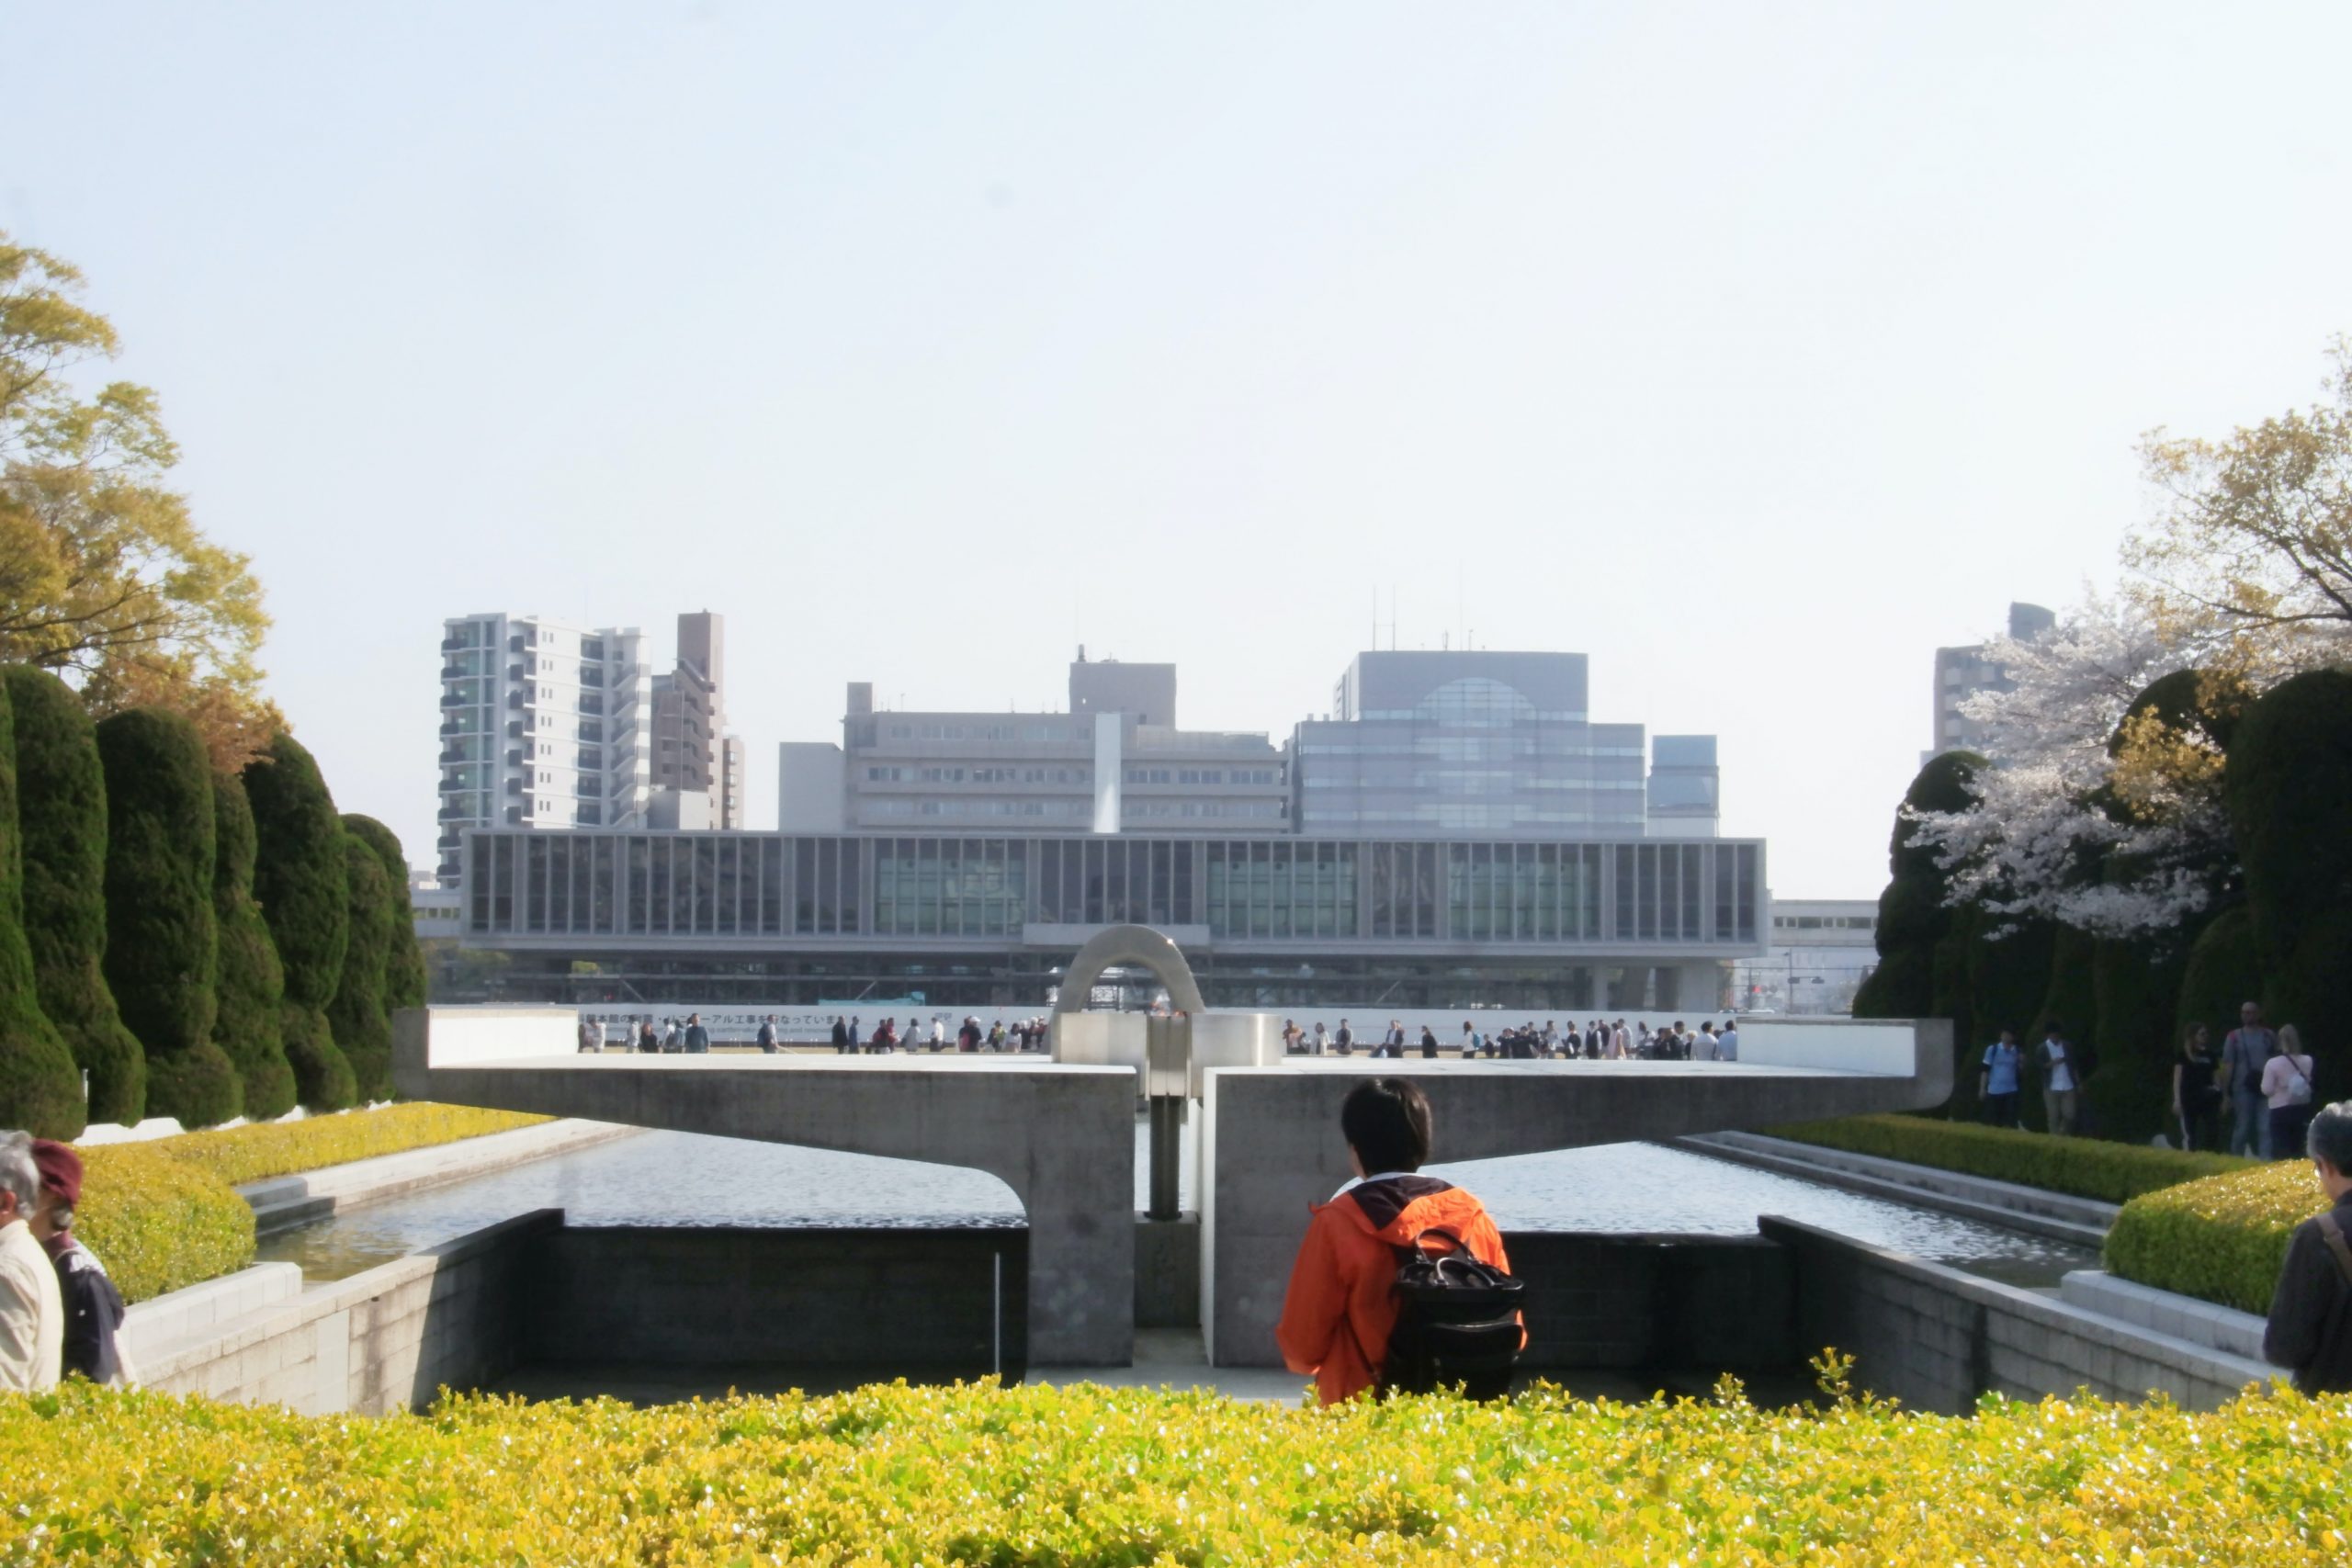 Hiroshima peace memorial museum